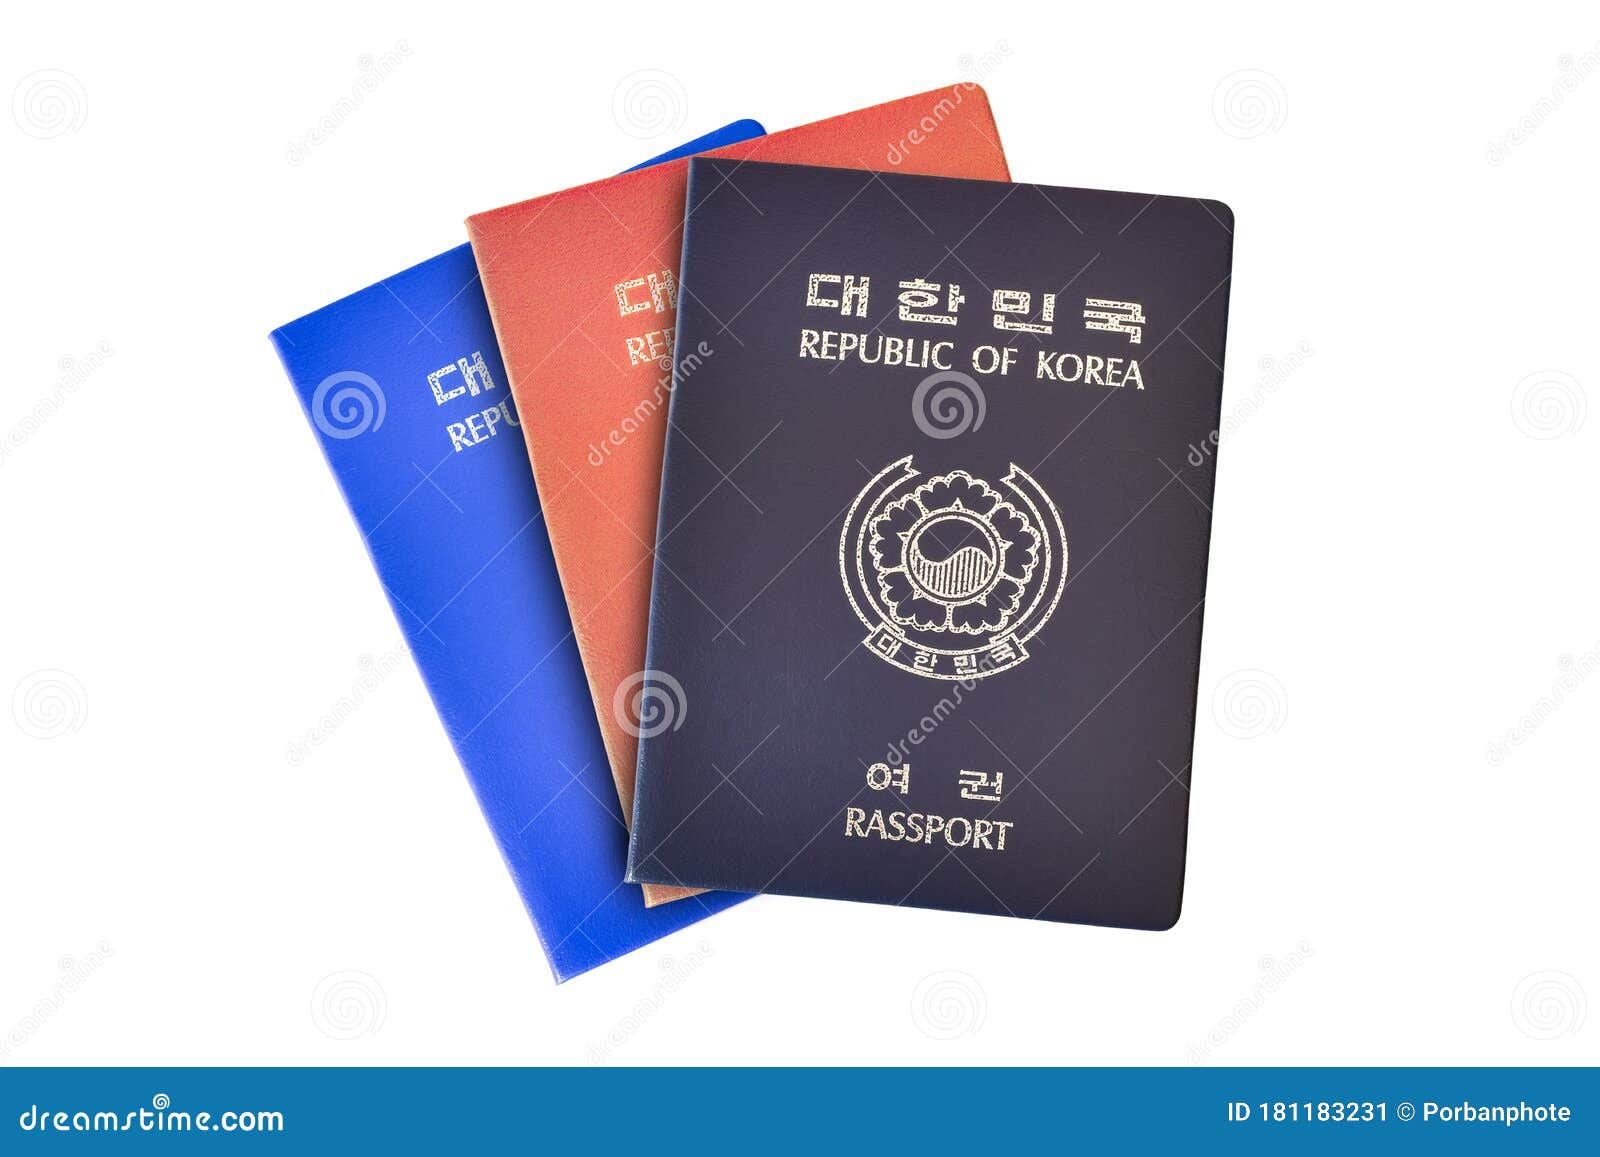 Passport Of South Korea Isolated On White Background Stock Image